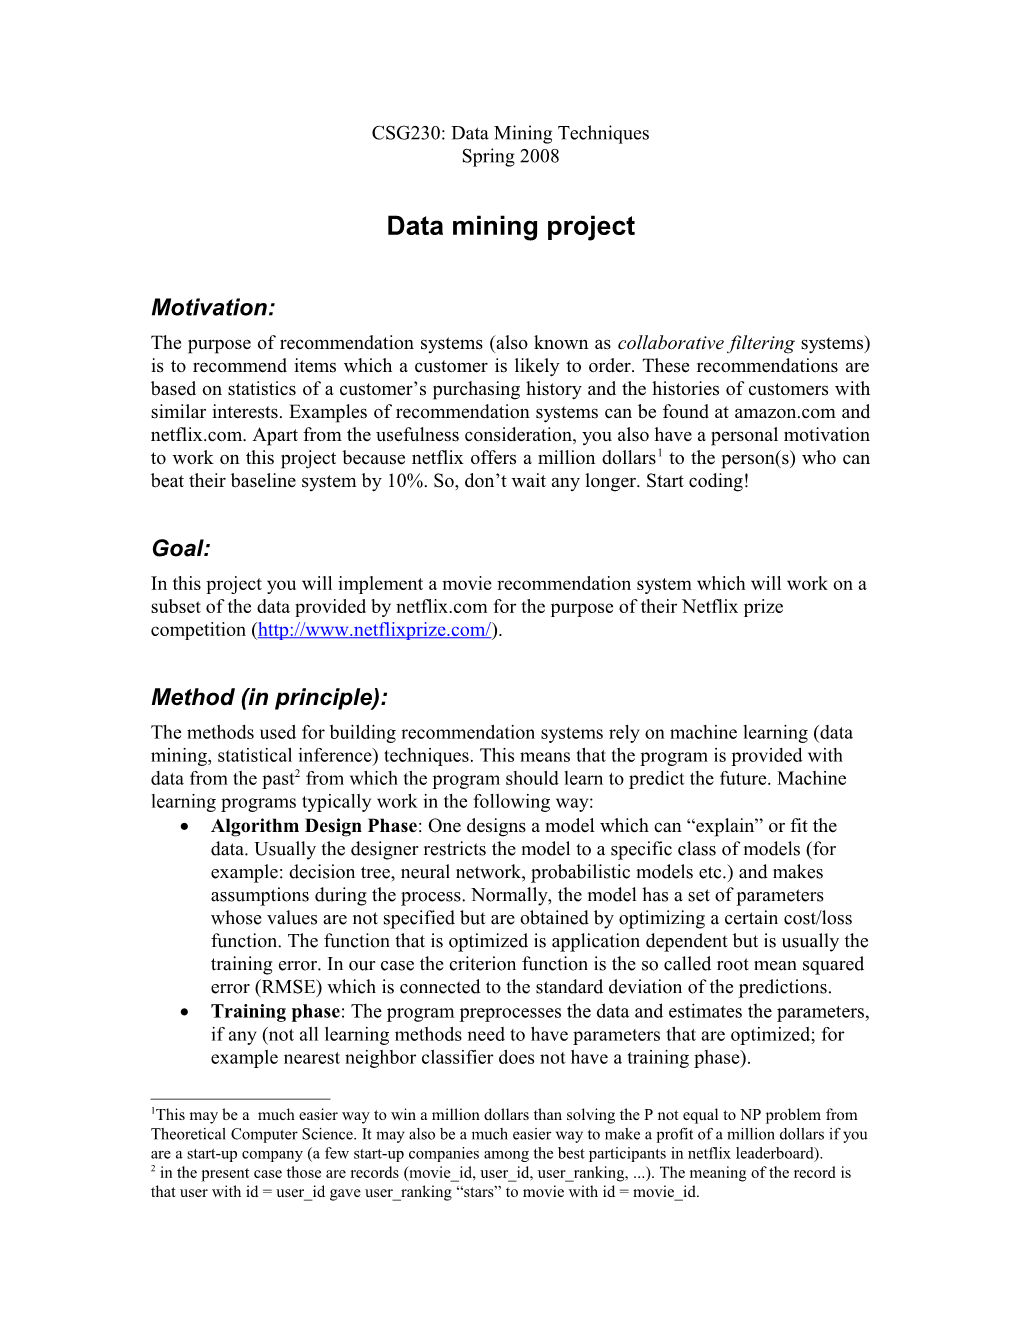 Data Mining Project